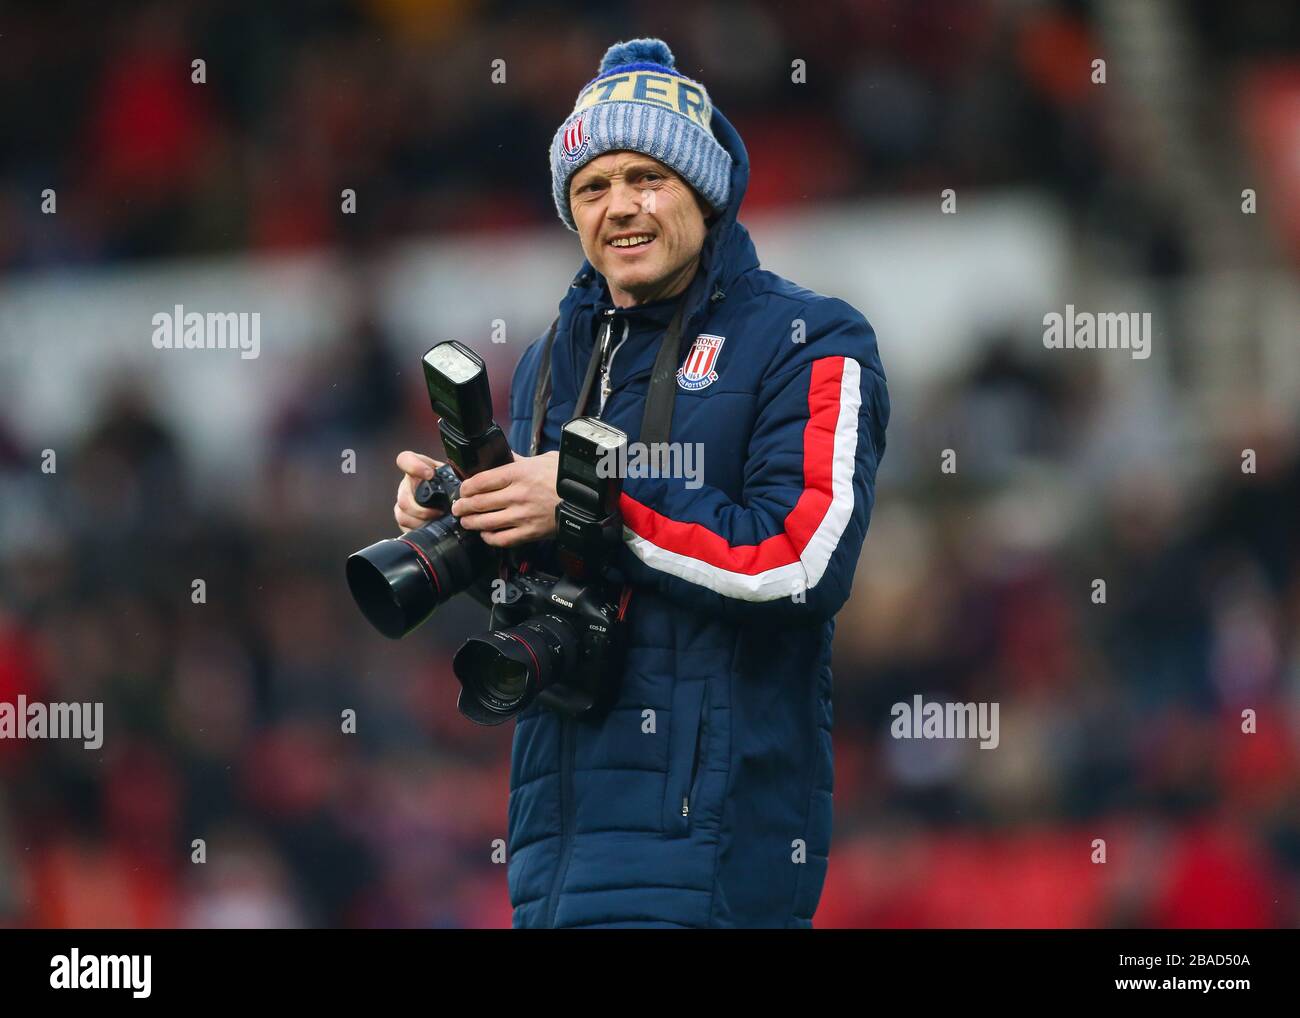 Stoke City club photographer Phil Greig at work Stock Photo